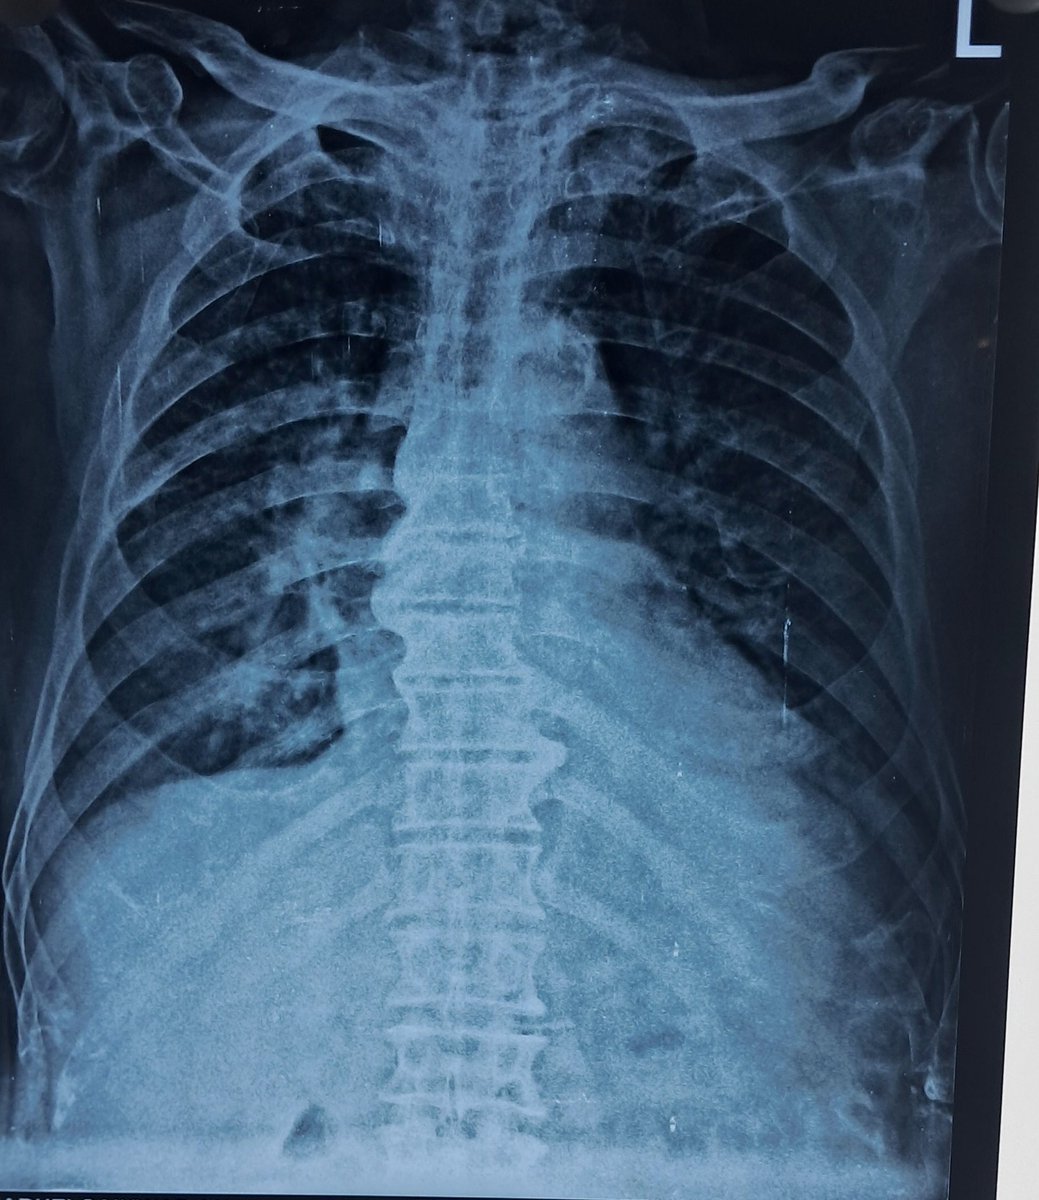 Interpret CXR
60Male HTN, sudden onset dyspnea with sweating
@anujtiwari11 @DrAkhilRaghavan @DrRanjit_4_u @DrShauryaGarg @cardiodoc1988 @Rajatpsoge @radiologistpage @Radiopaedia #MedTwitter #radiology #imaging 
#chestxray